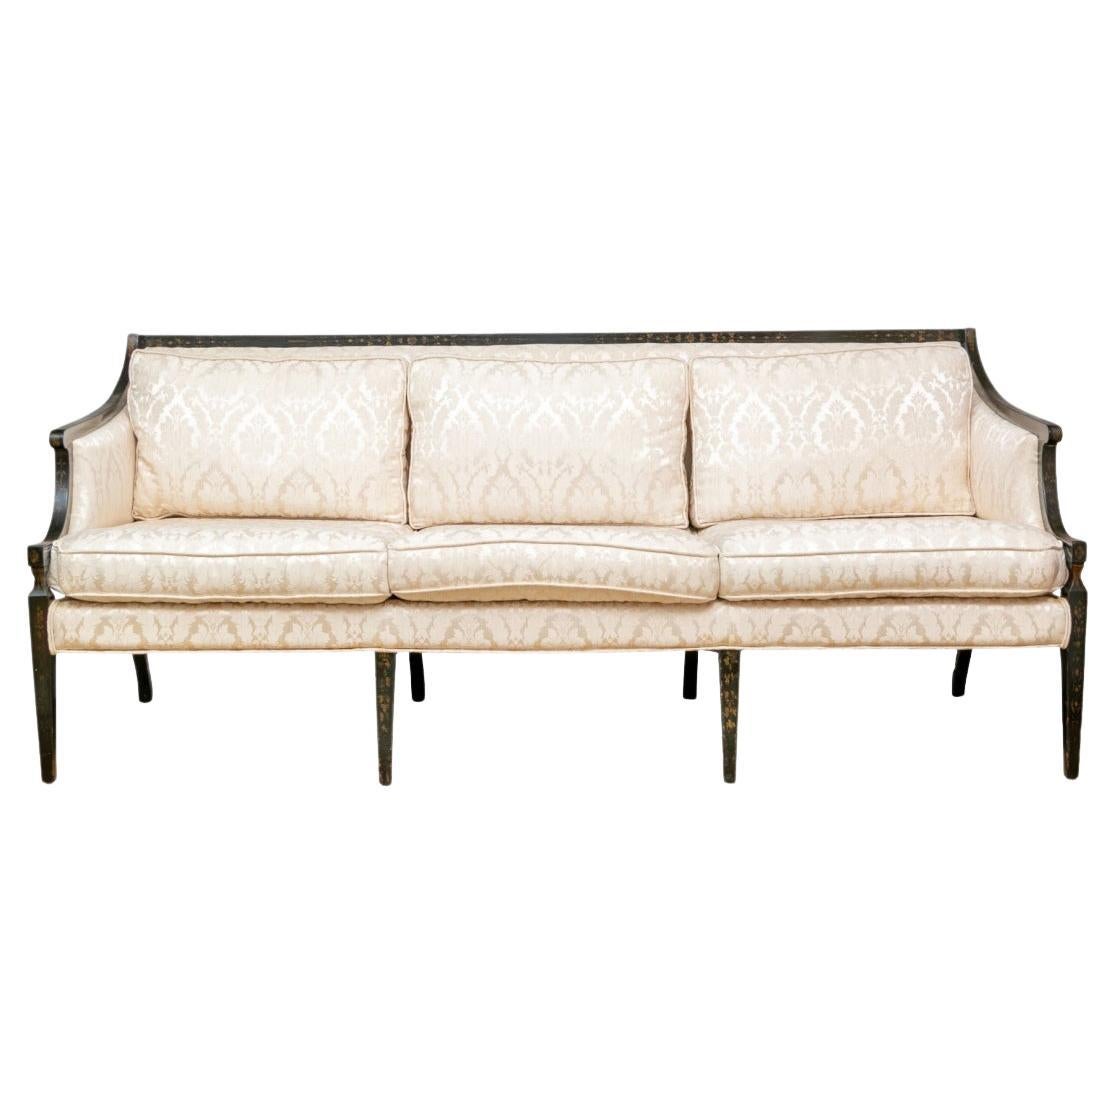 Vintage Hollywood Regency Style Tone-on-Tone Jacquard Upholstered Sofa #2 For Sale